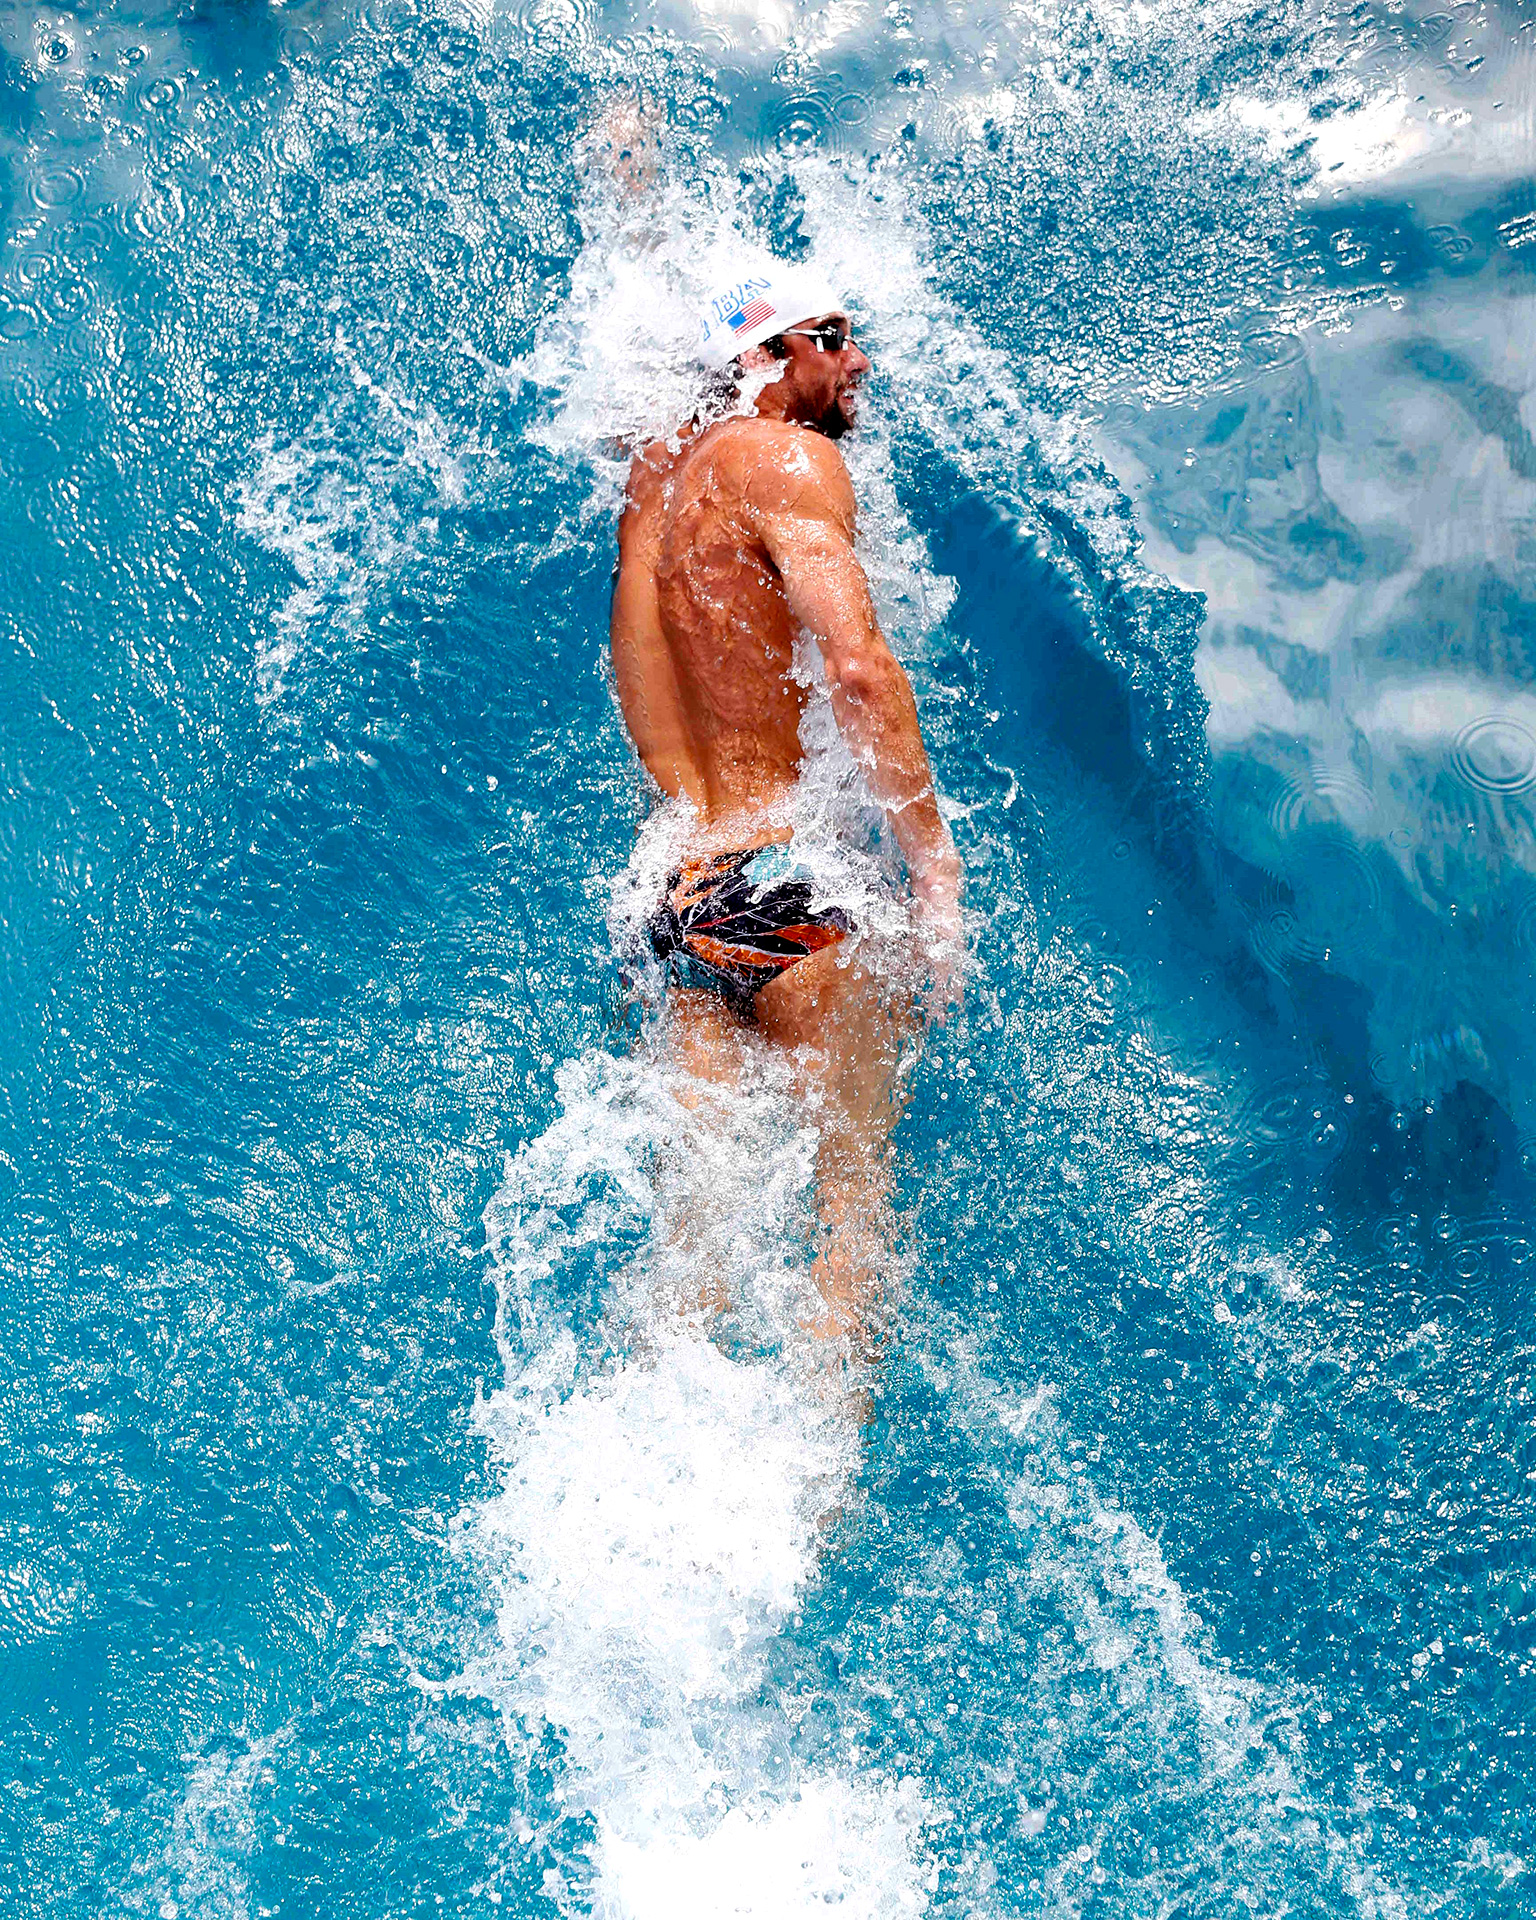 Michael Phelps The Week in Pictures June 16June 22, 2014 ESPN